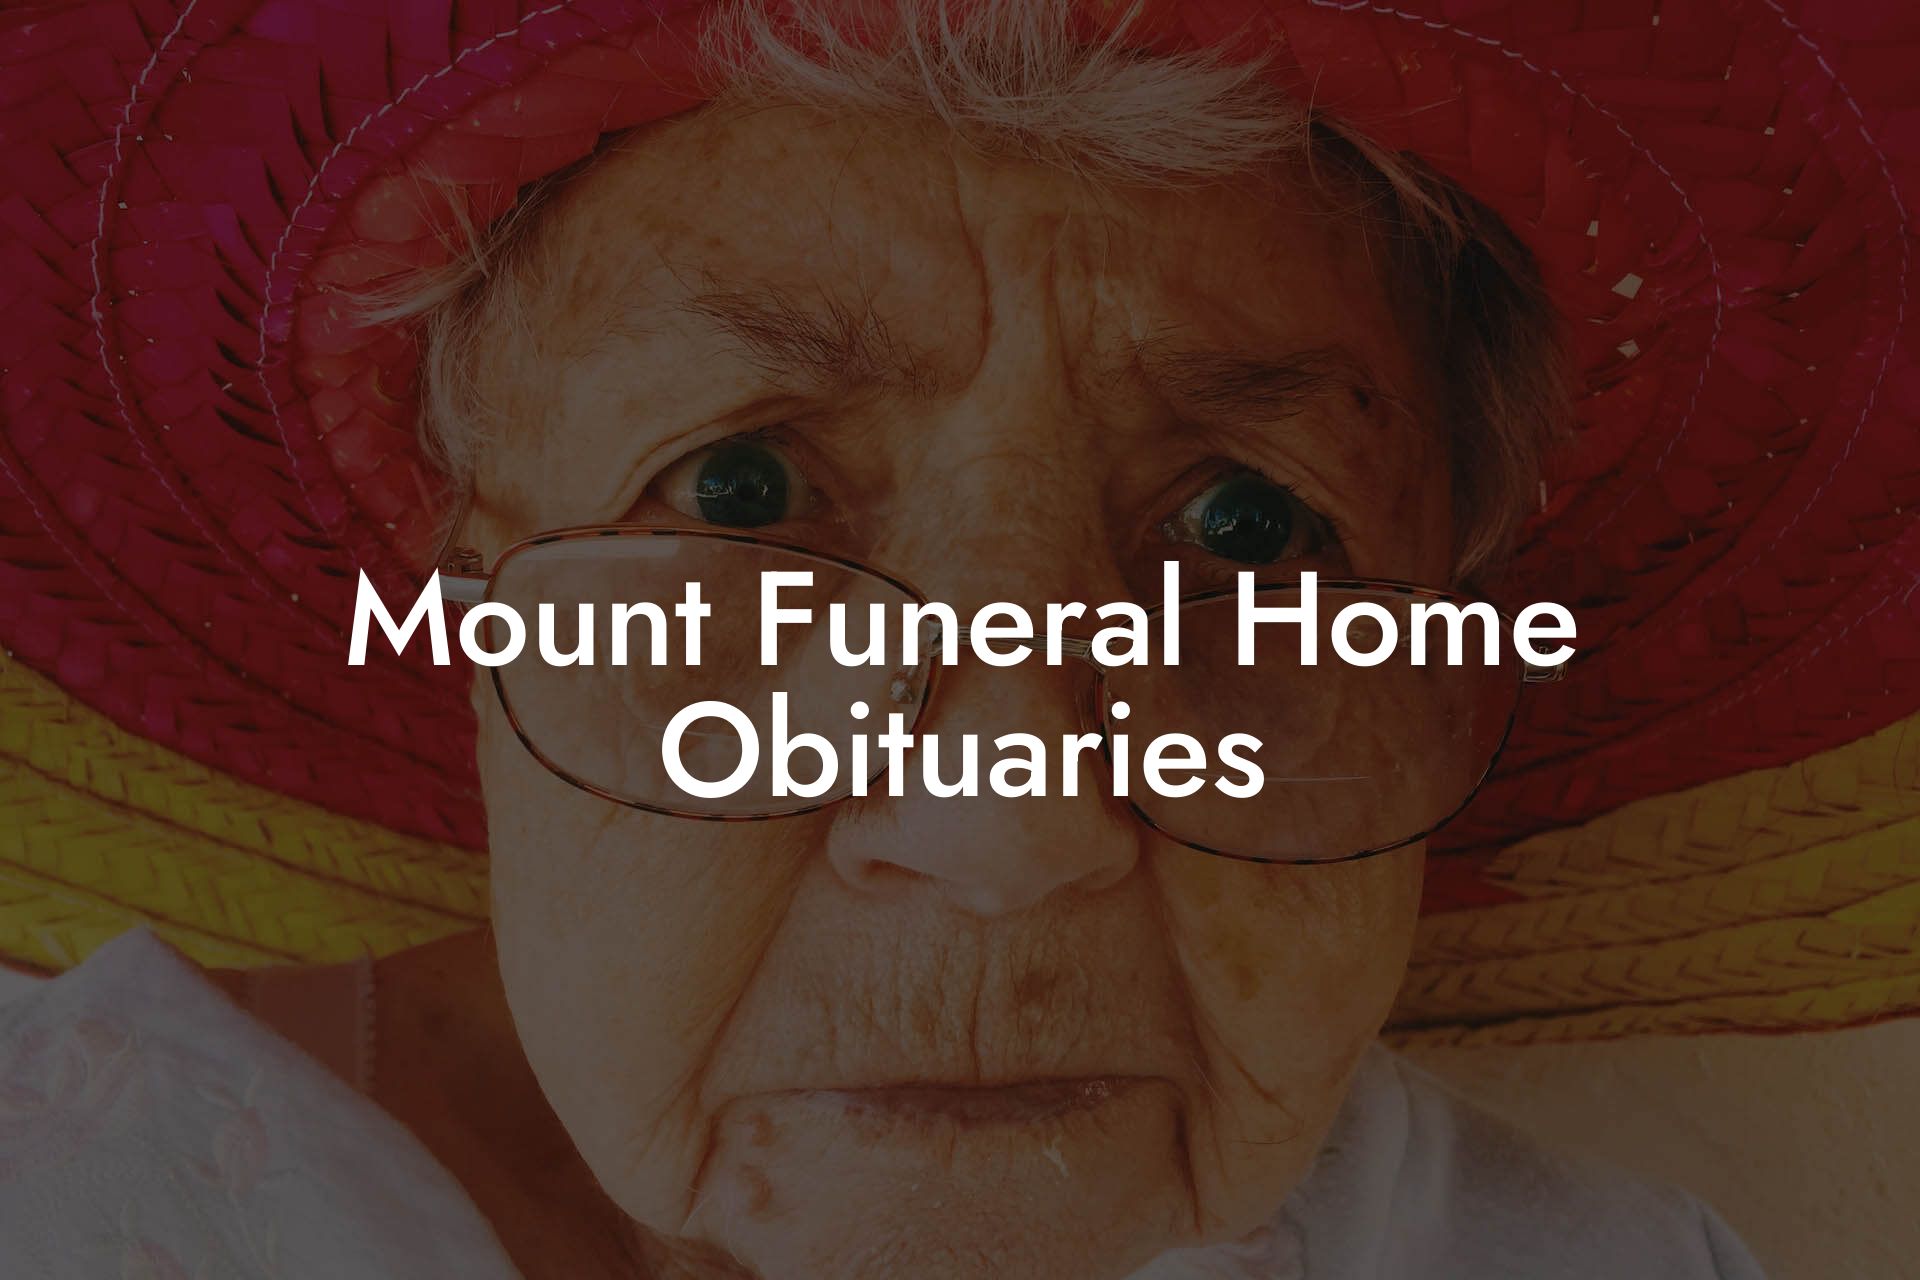 Mount Funeral Home Obituaries